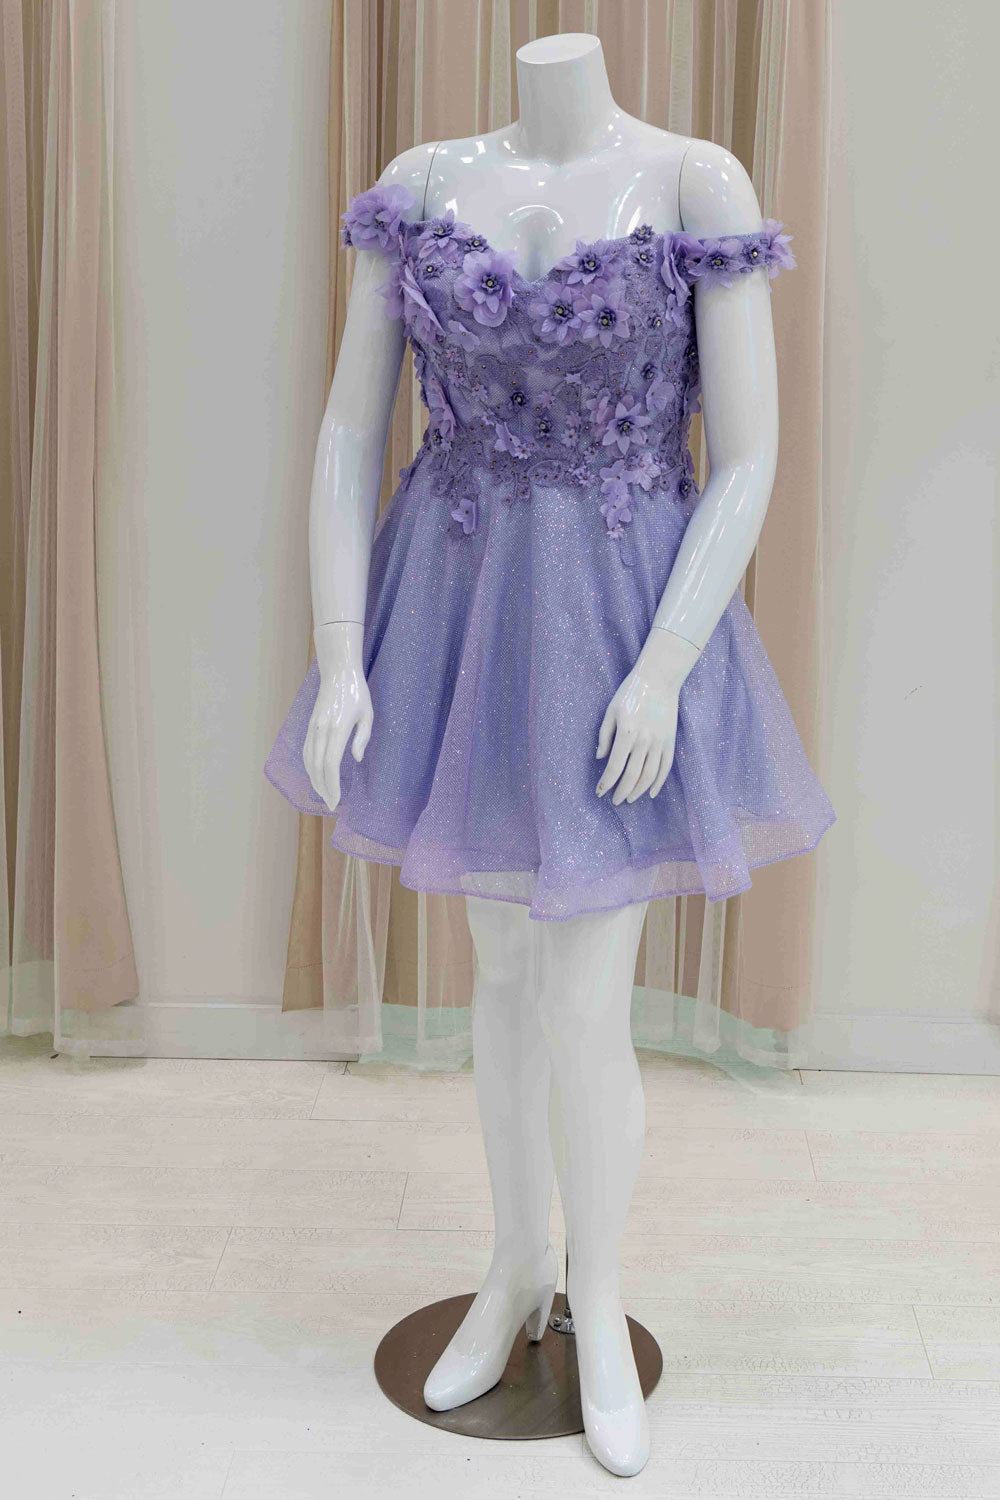 Short Sweet 16 Dress in Lavender